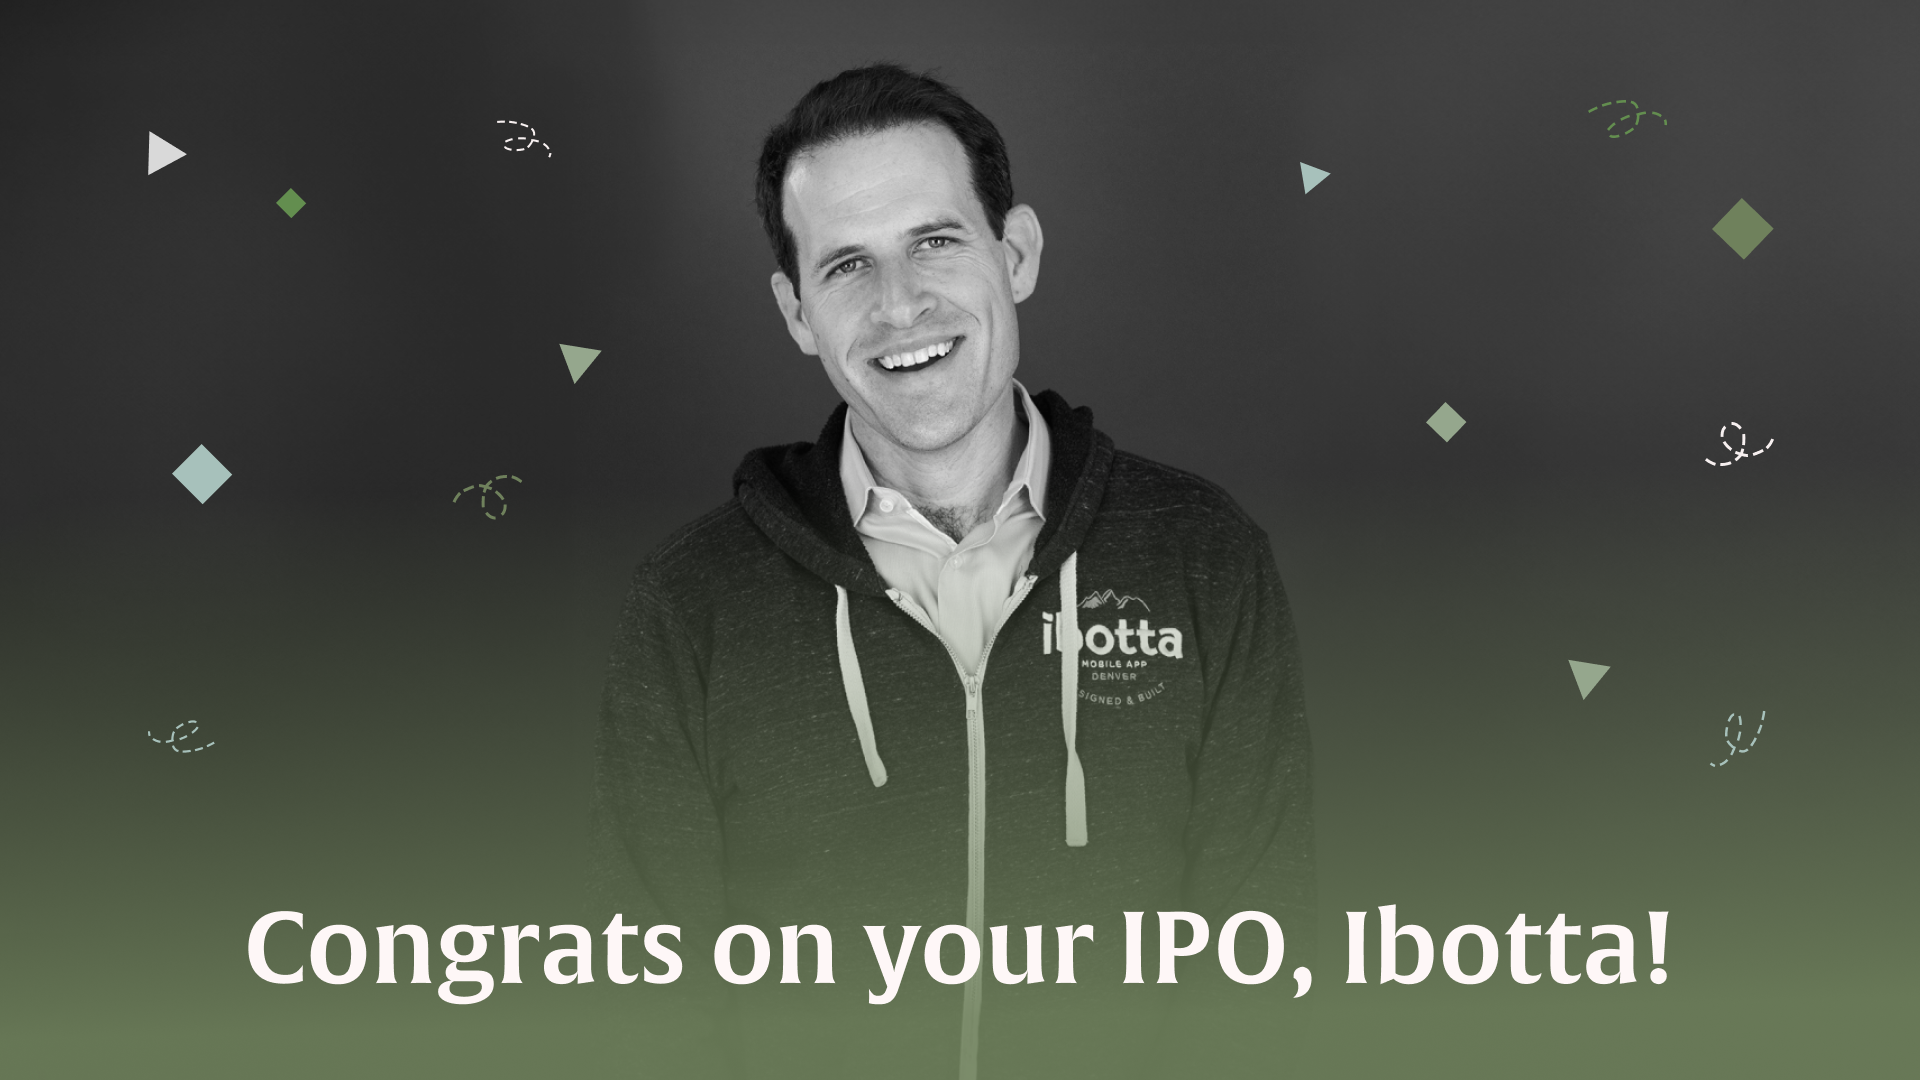 Image congratulating Ibotta on their IPO